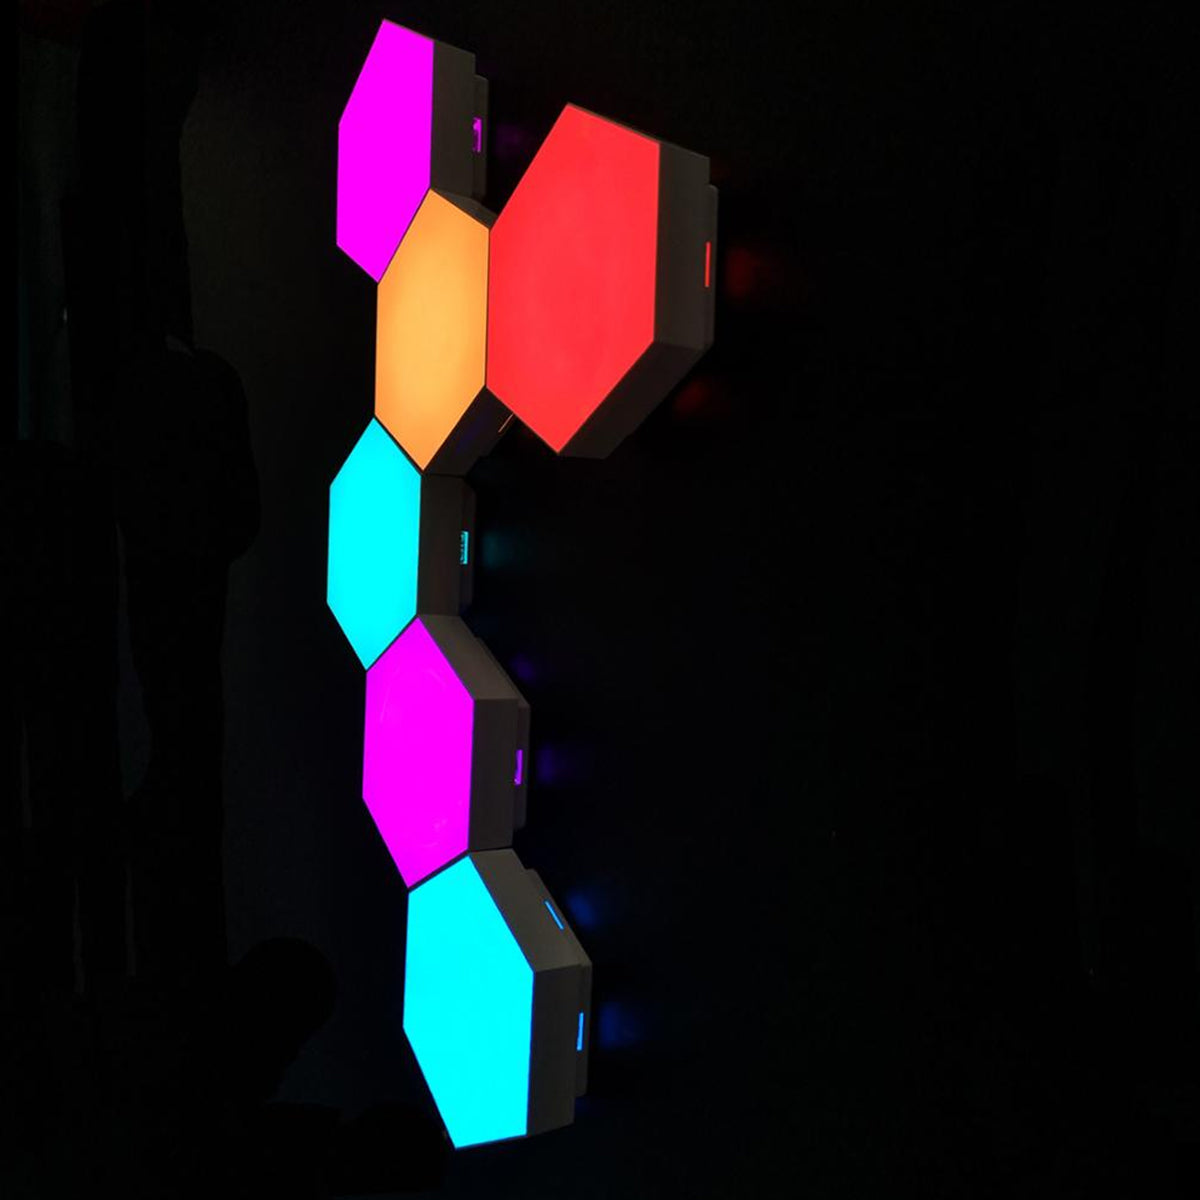 Panel RGB Audiorítmico con Conexión Bluetooth 16 millones de colores